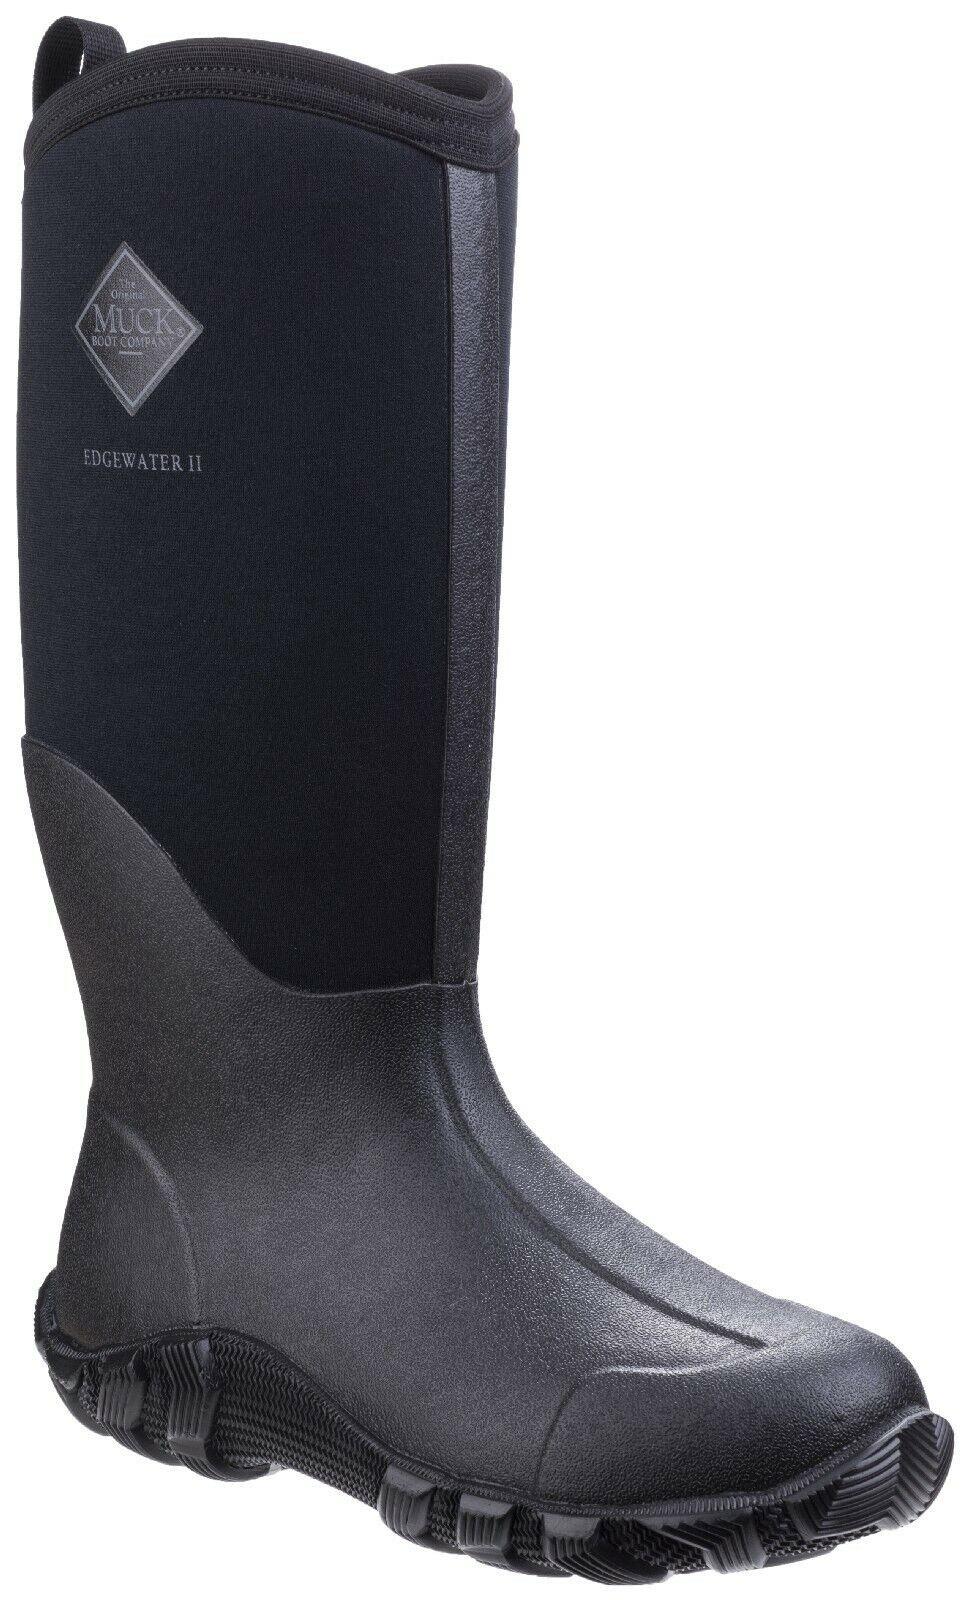 Muck Boots Edgewater II black neoprene rubber multi-purpose wellington boot